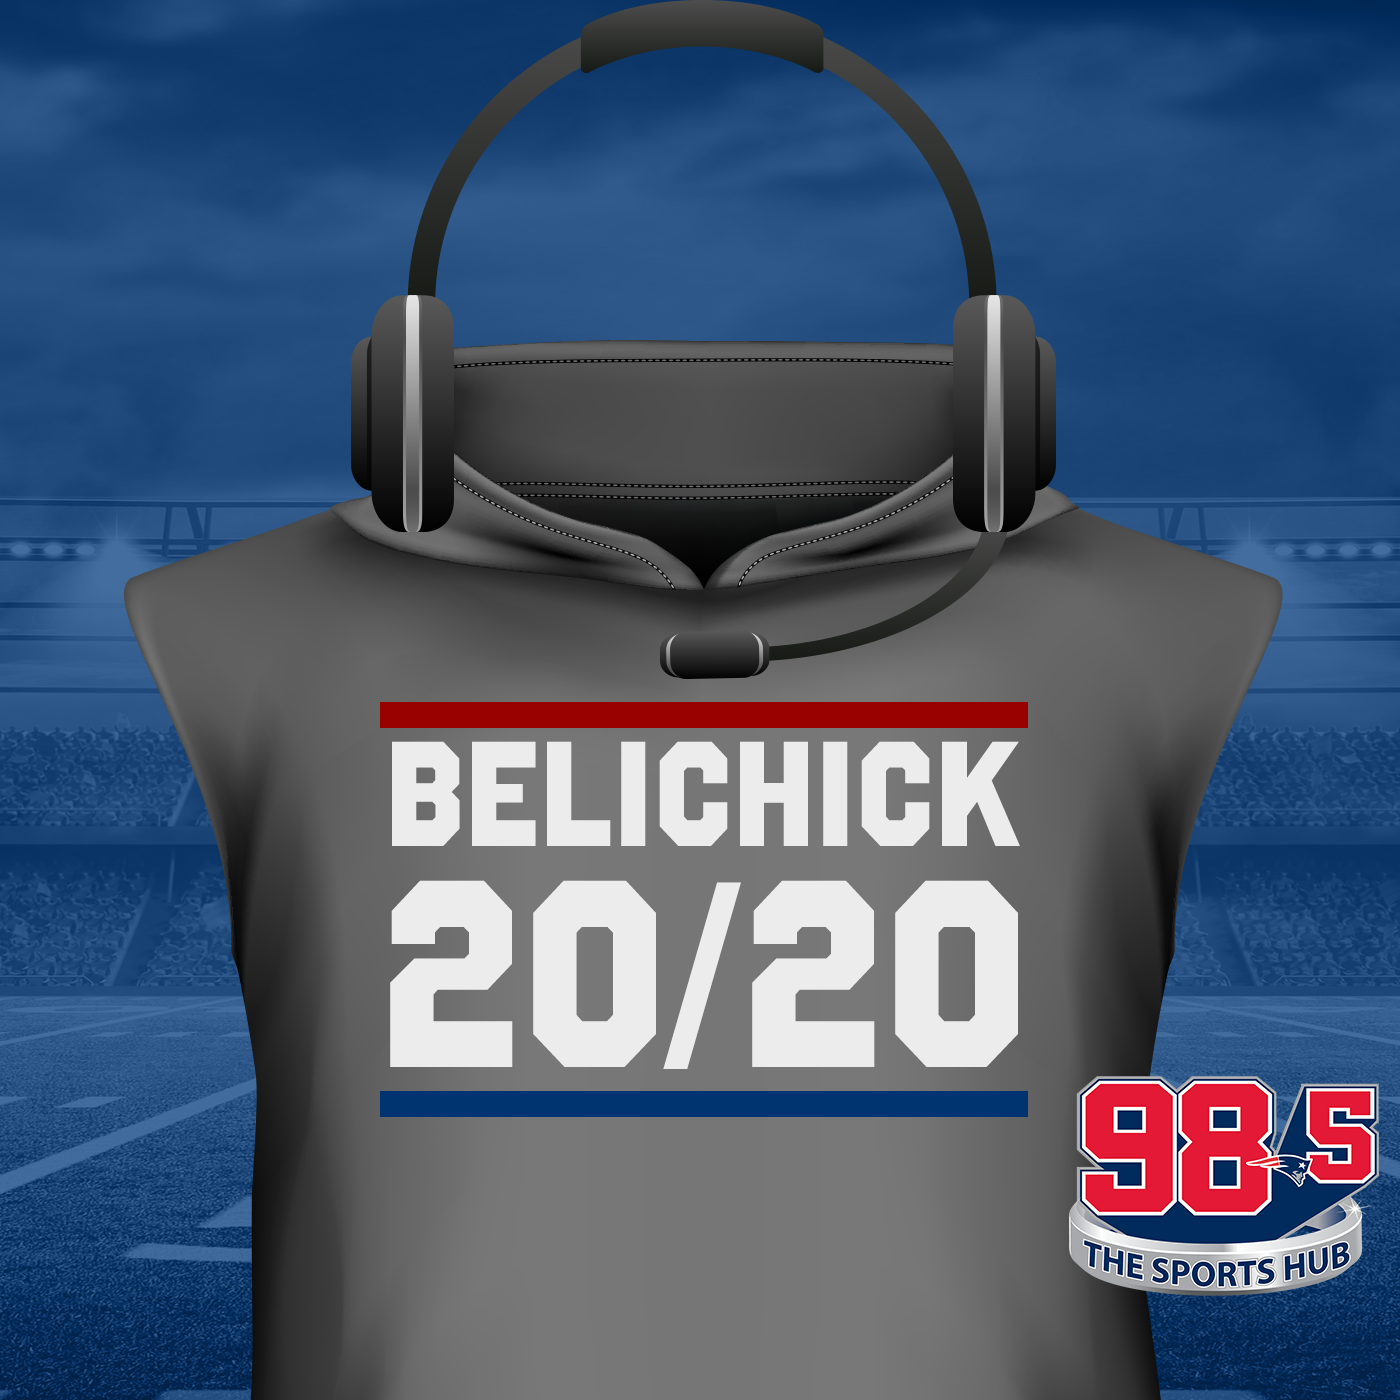 Bill Belichick 20/20